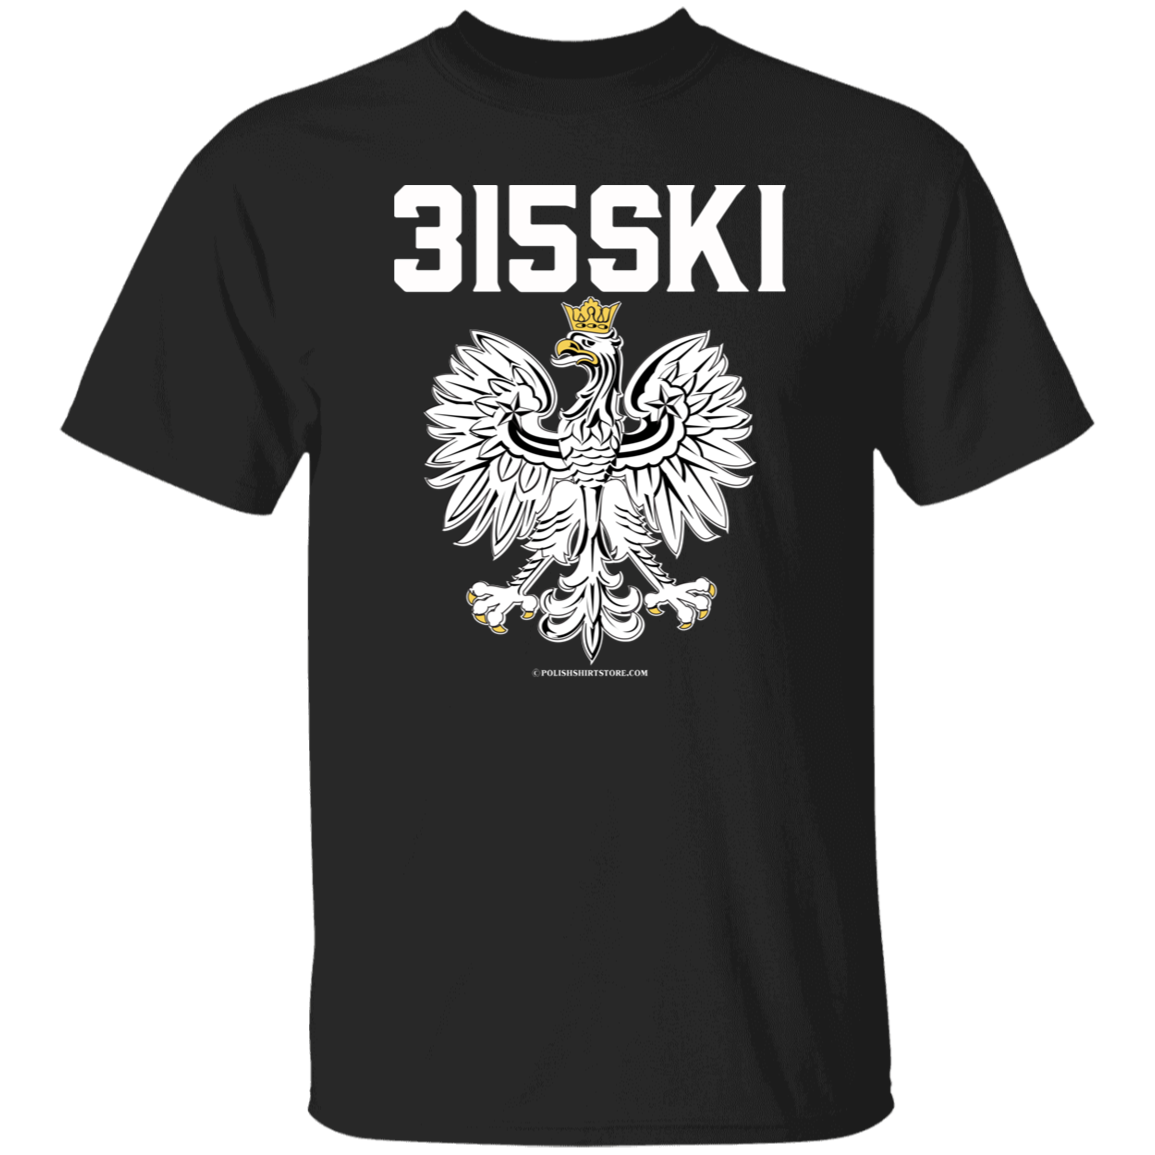 315SKI Apparel CustomCat G500 5.3 oz. T-Shirt Black S